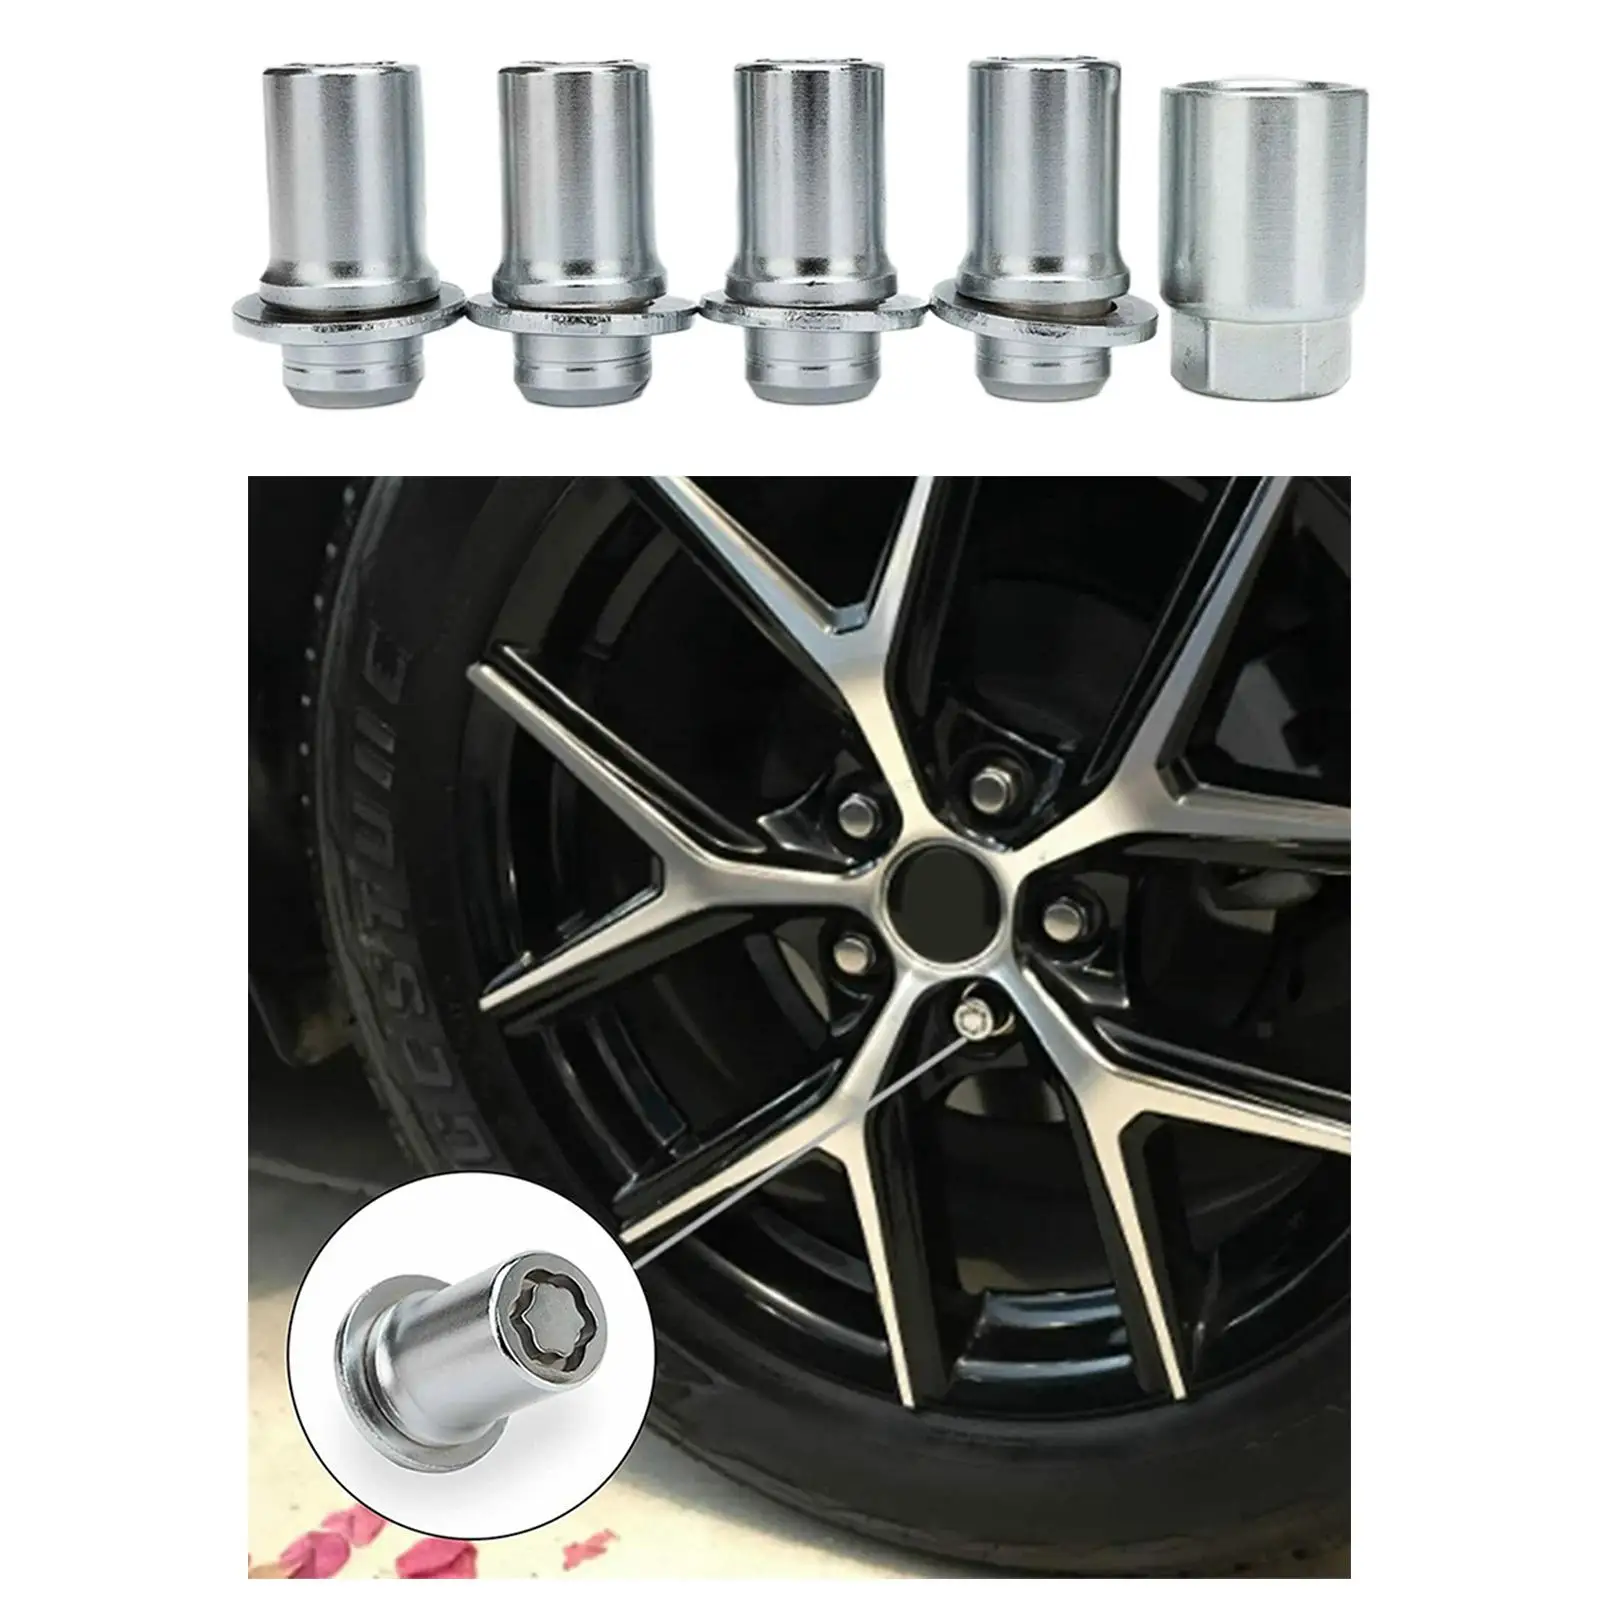 5 Pieces Car Wheel Lock Lug Nut Set 00276-00901 Anti Theft M12x1.5 Replace for  Corolla  Sequoia GS400